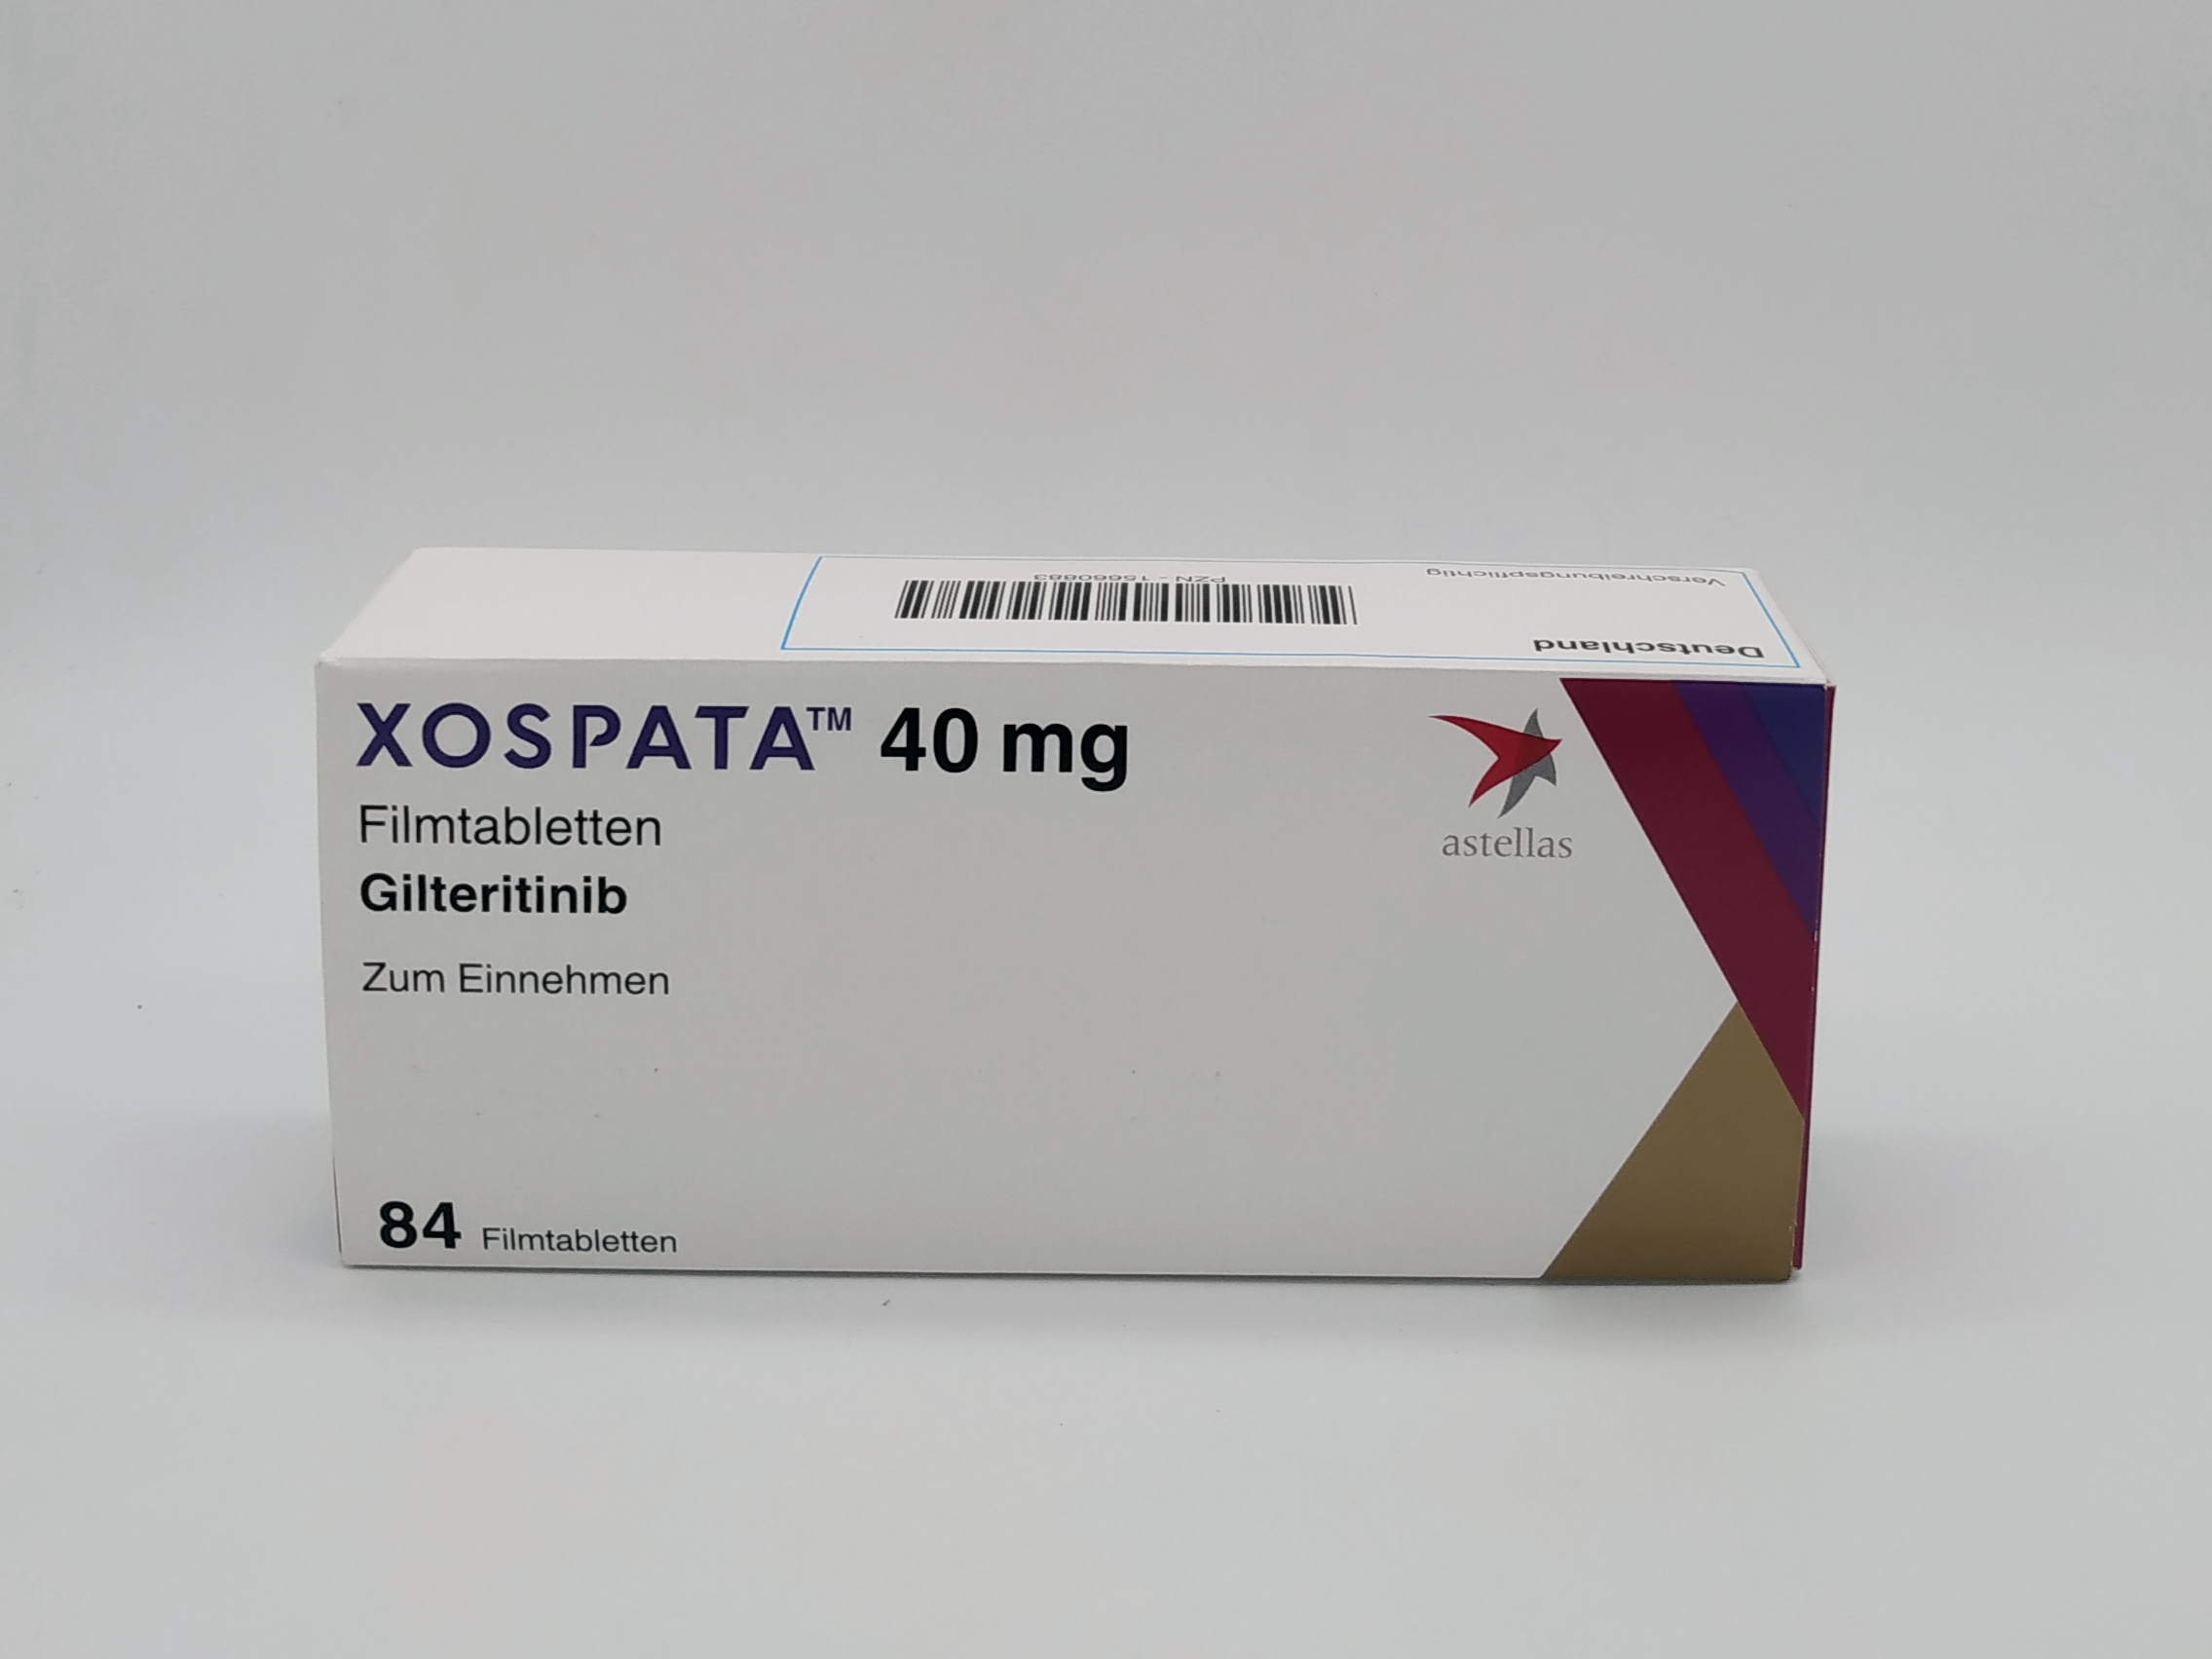 Xospata（吉瑞替尼）治疗急性髓系白血病3期临床失败，未达到生存目标